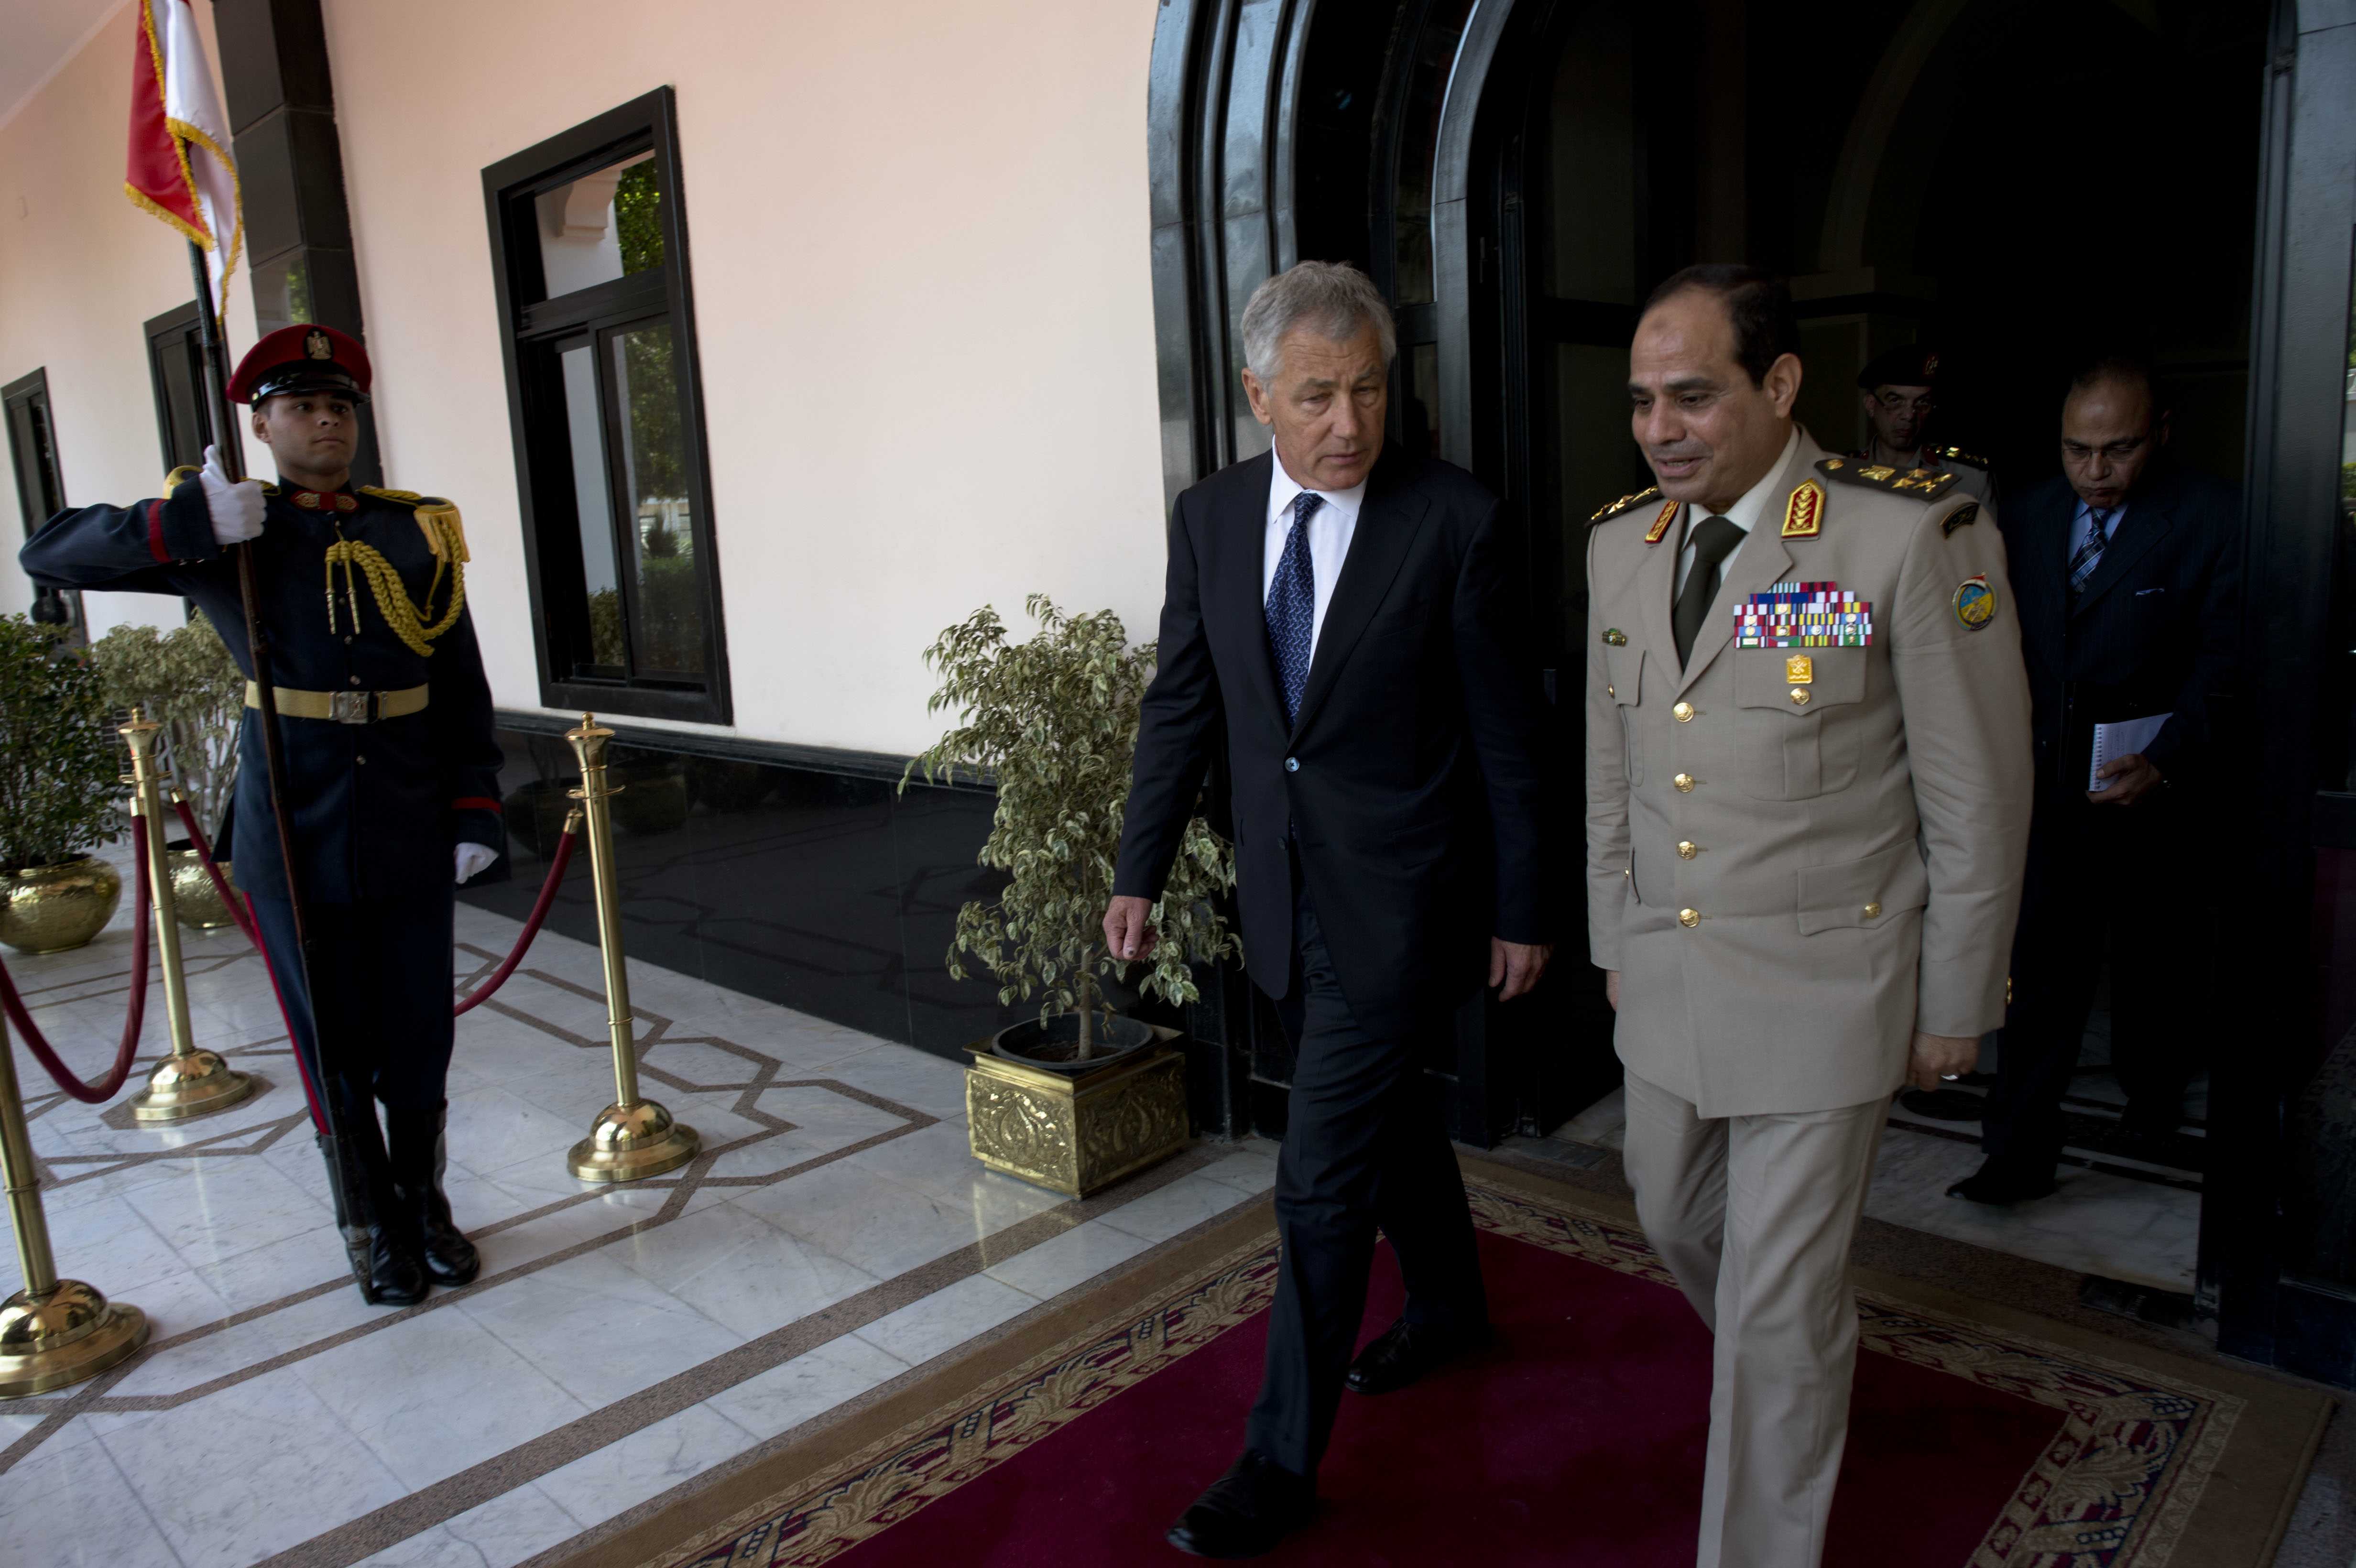 Presidential candidate Abdel Fattah al-Sisi walks alongside United States Secretary of Defense Chuck Hagel in Cairo, Egypt. Image courtesy of Creative Commons Search.